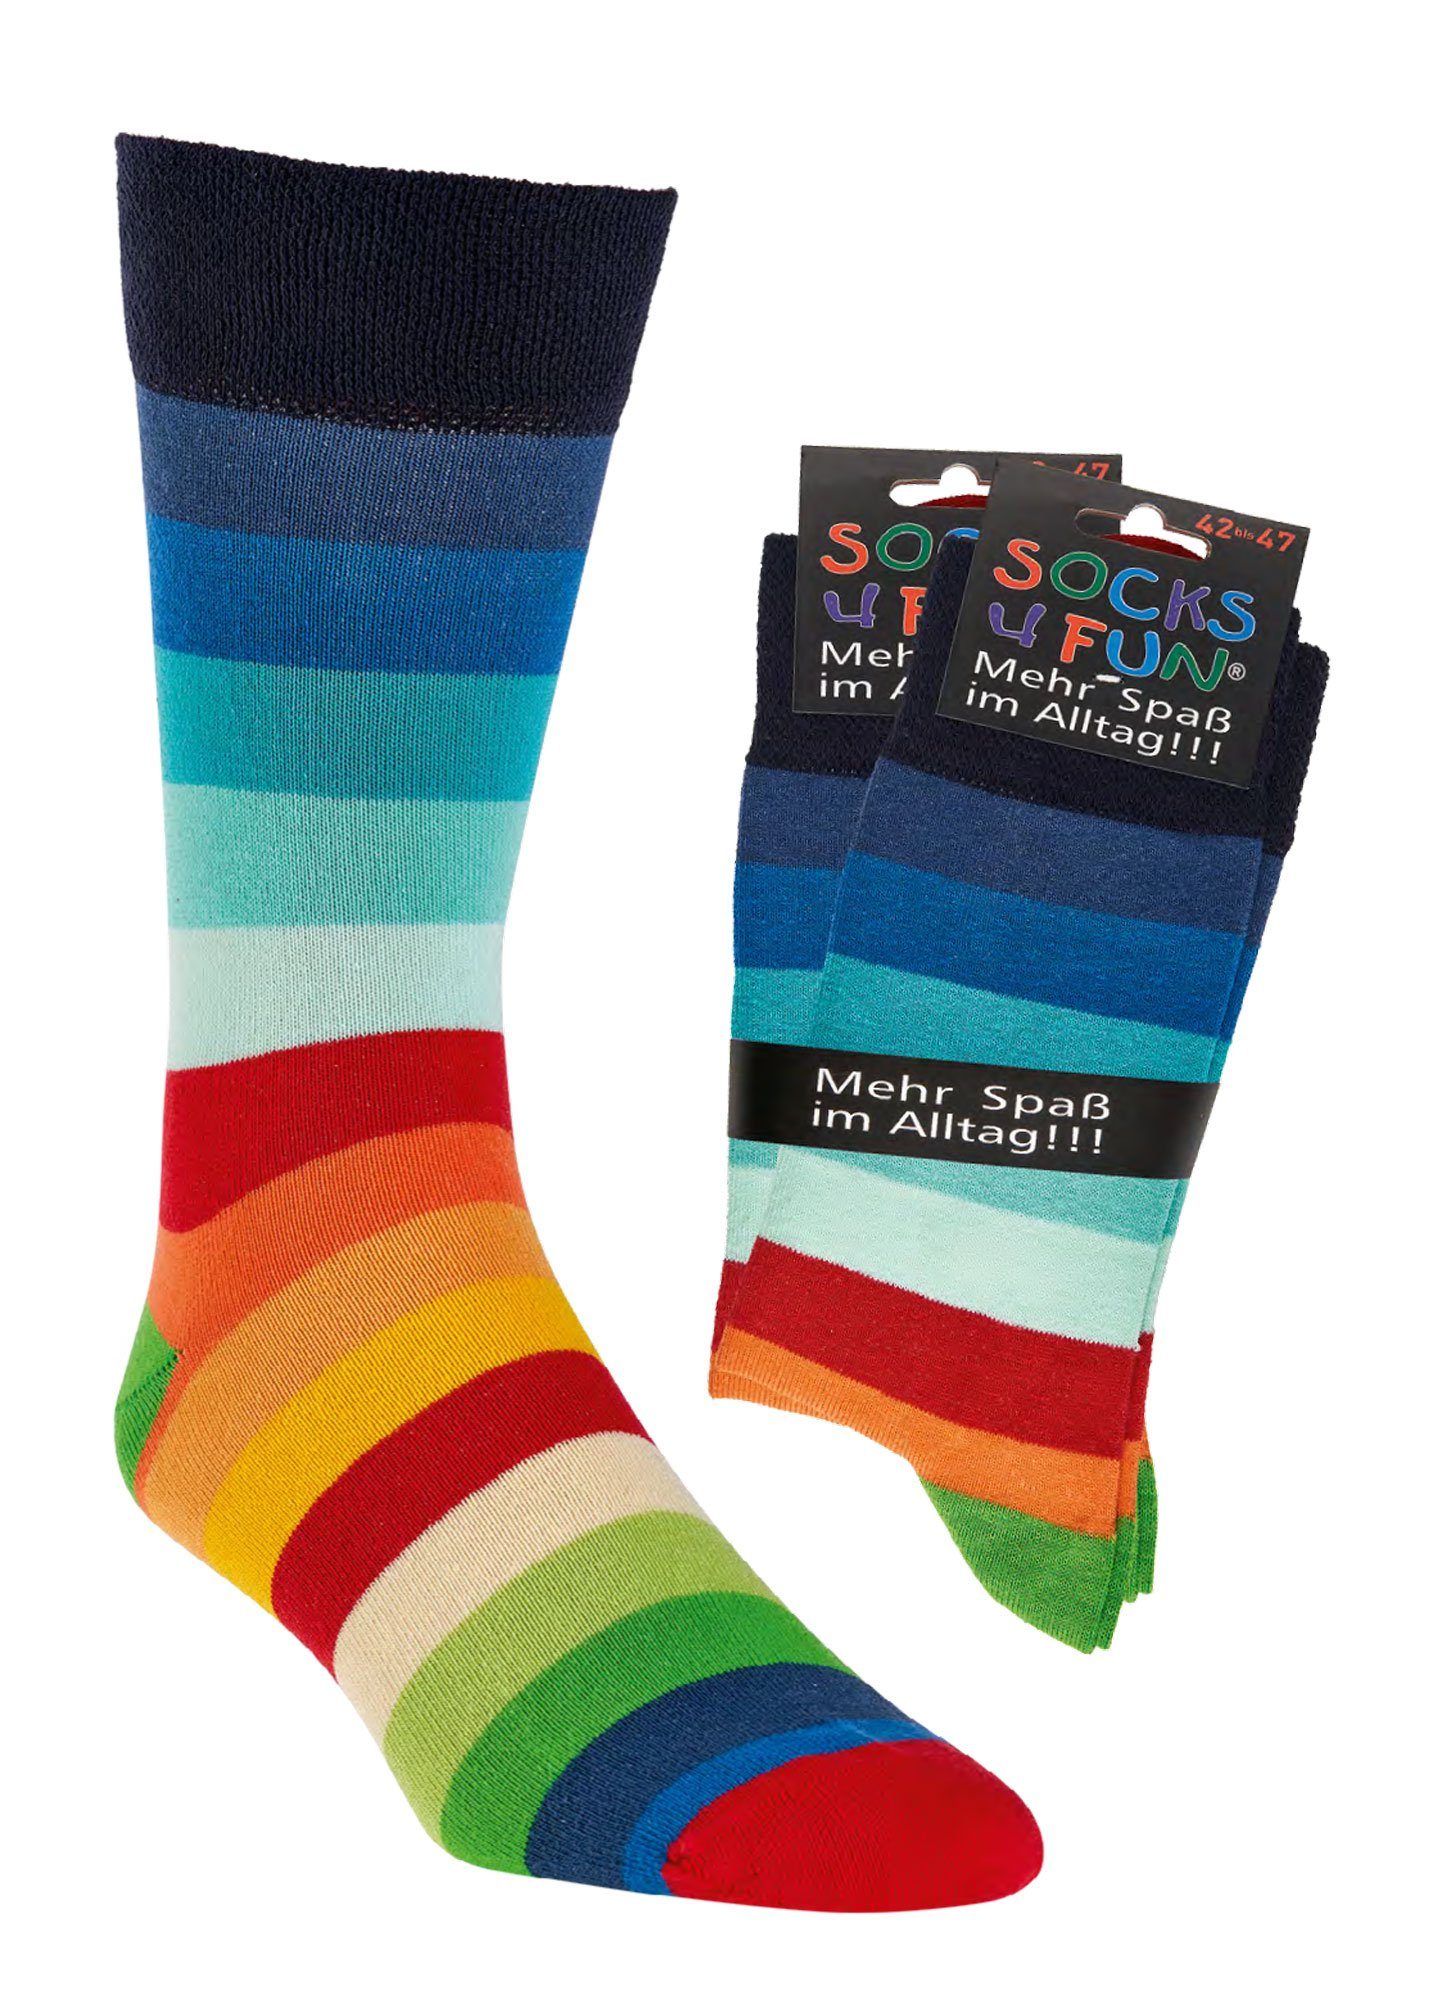 Baumwolle Rainbow Regenbogen 4 Toleranz Socken Socks Unisex Paar) Socken LGBTQ (2 Fun